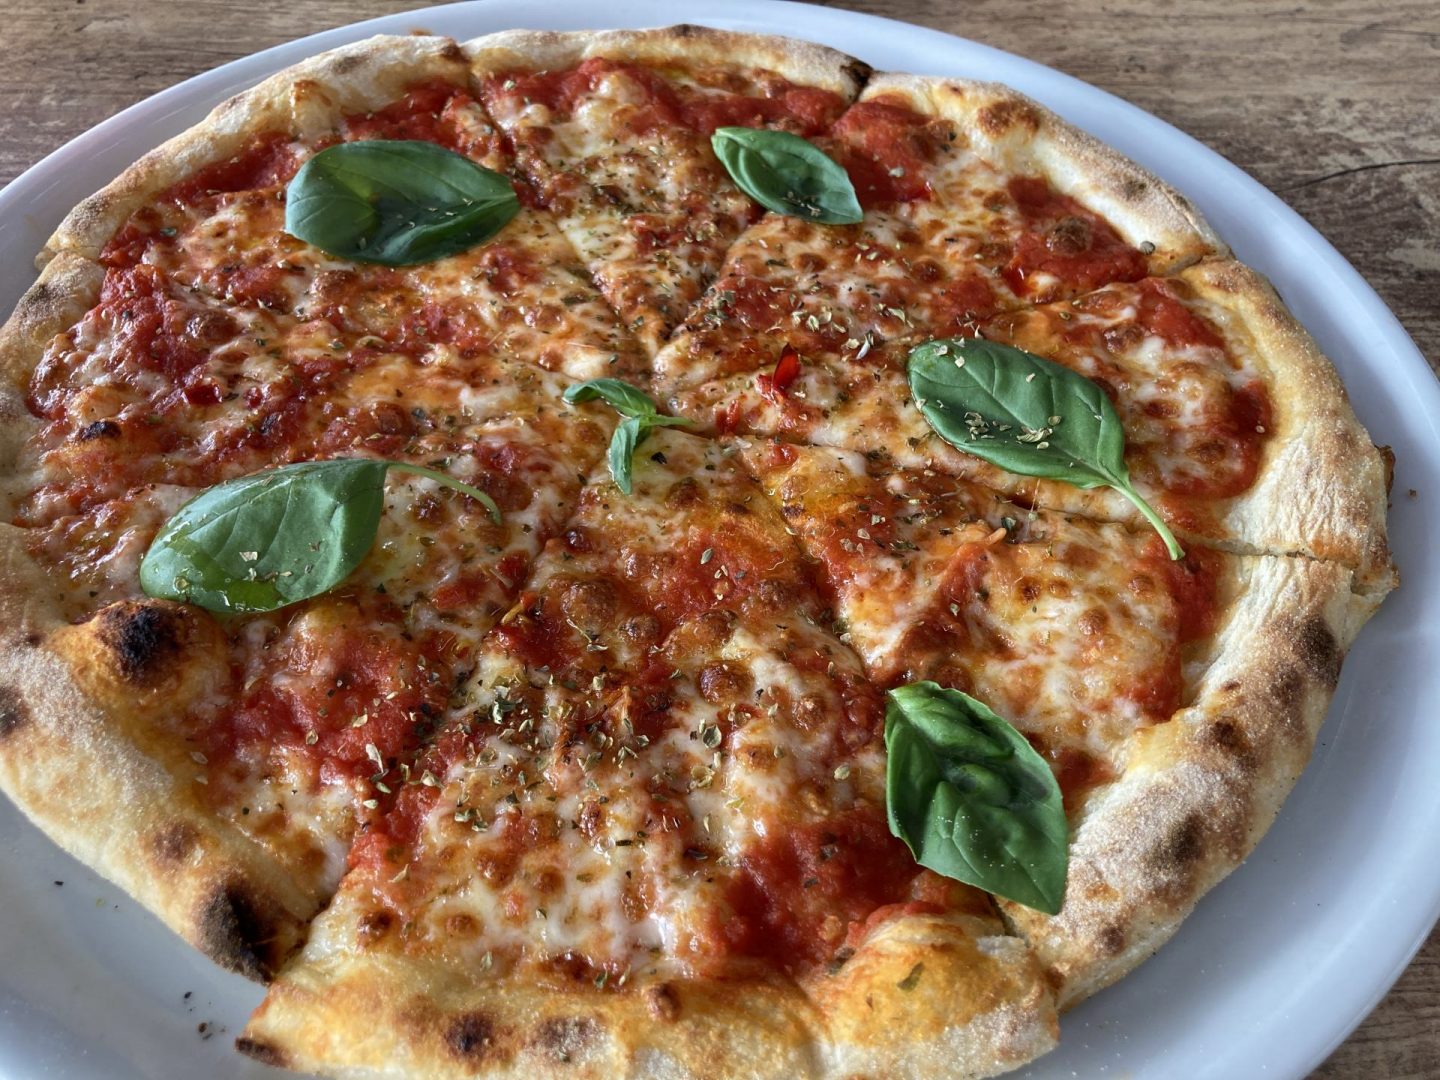 Erfahrung Bewertung Kritik Ristorante Amici Herne Pizza Margherita Foodblog Sternestulle